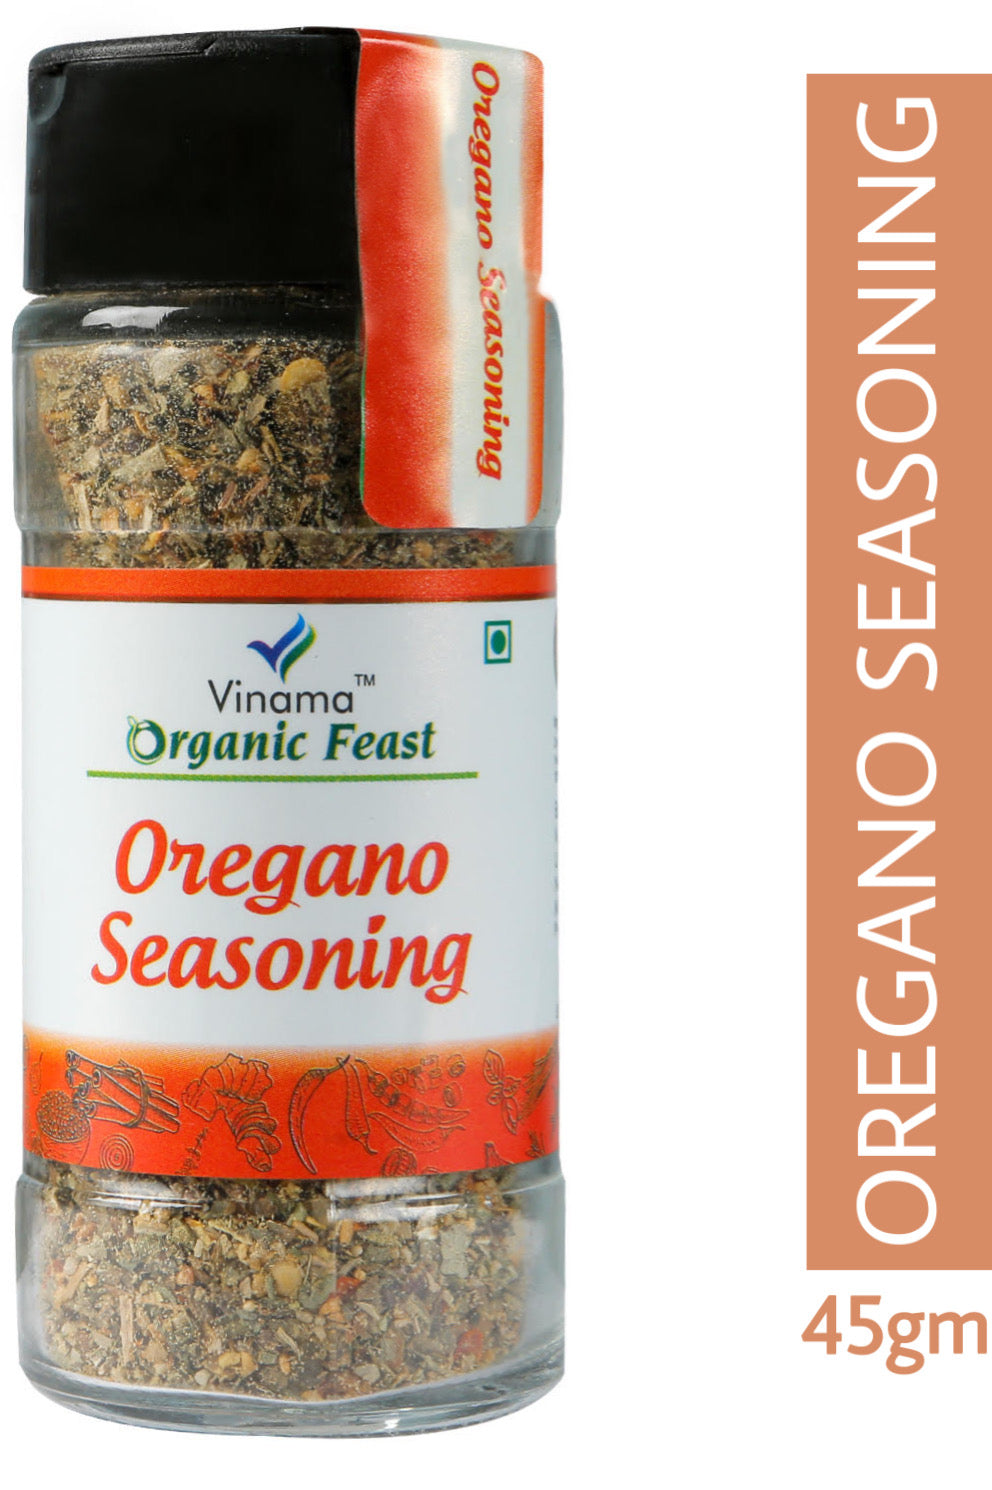 Vinama Organic Feast Oregano Seasoning